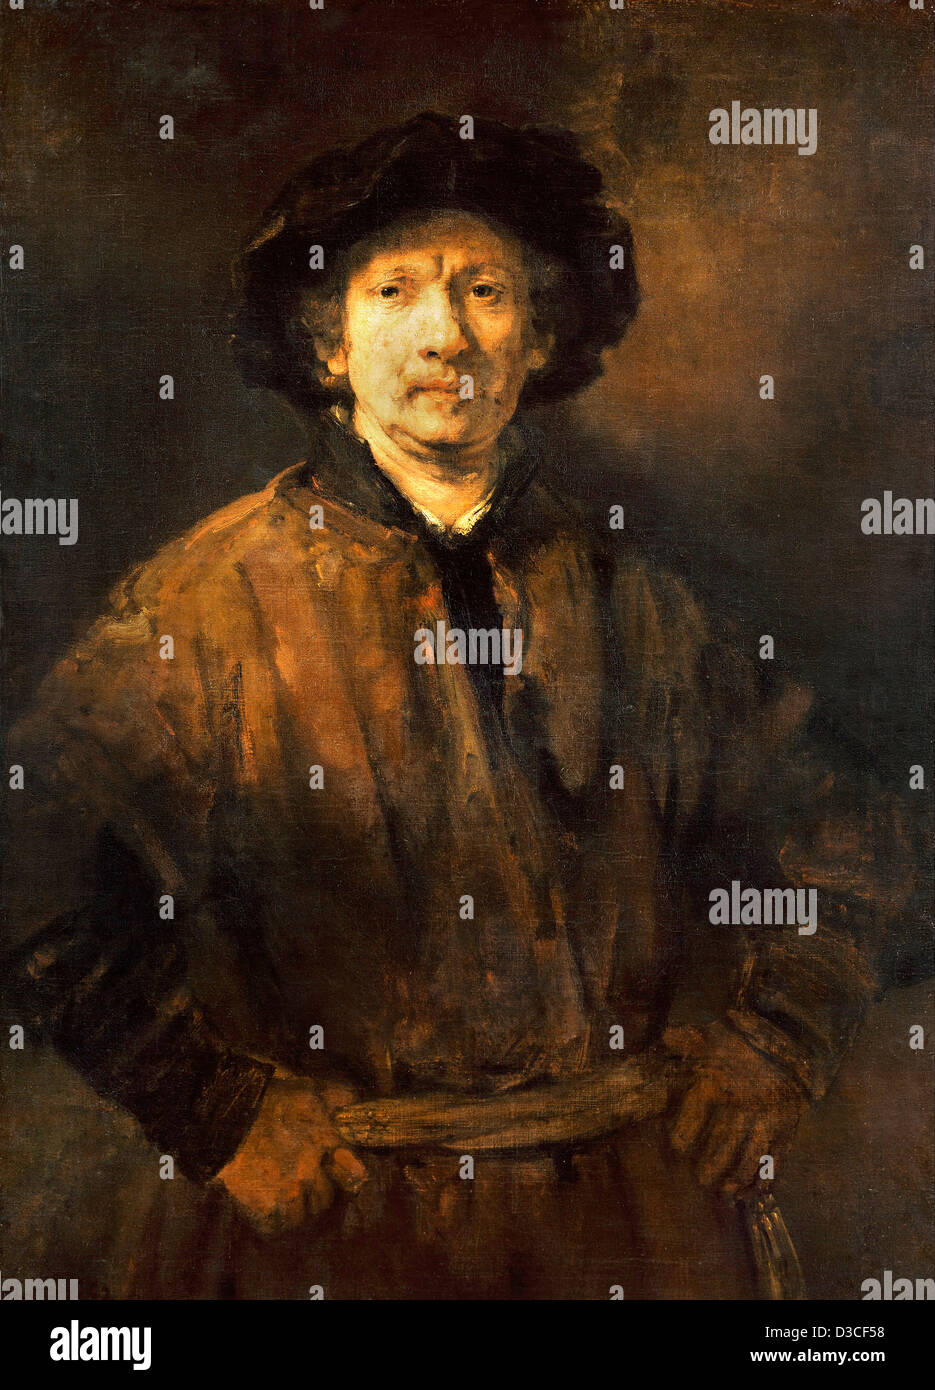 Rembrandt van Rijn, große Selbstporträt. 1652 Öl auf Leinwand. Barocke. Kunsthistorisches Museum, Wien. Stockfoto